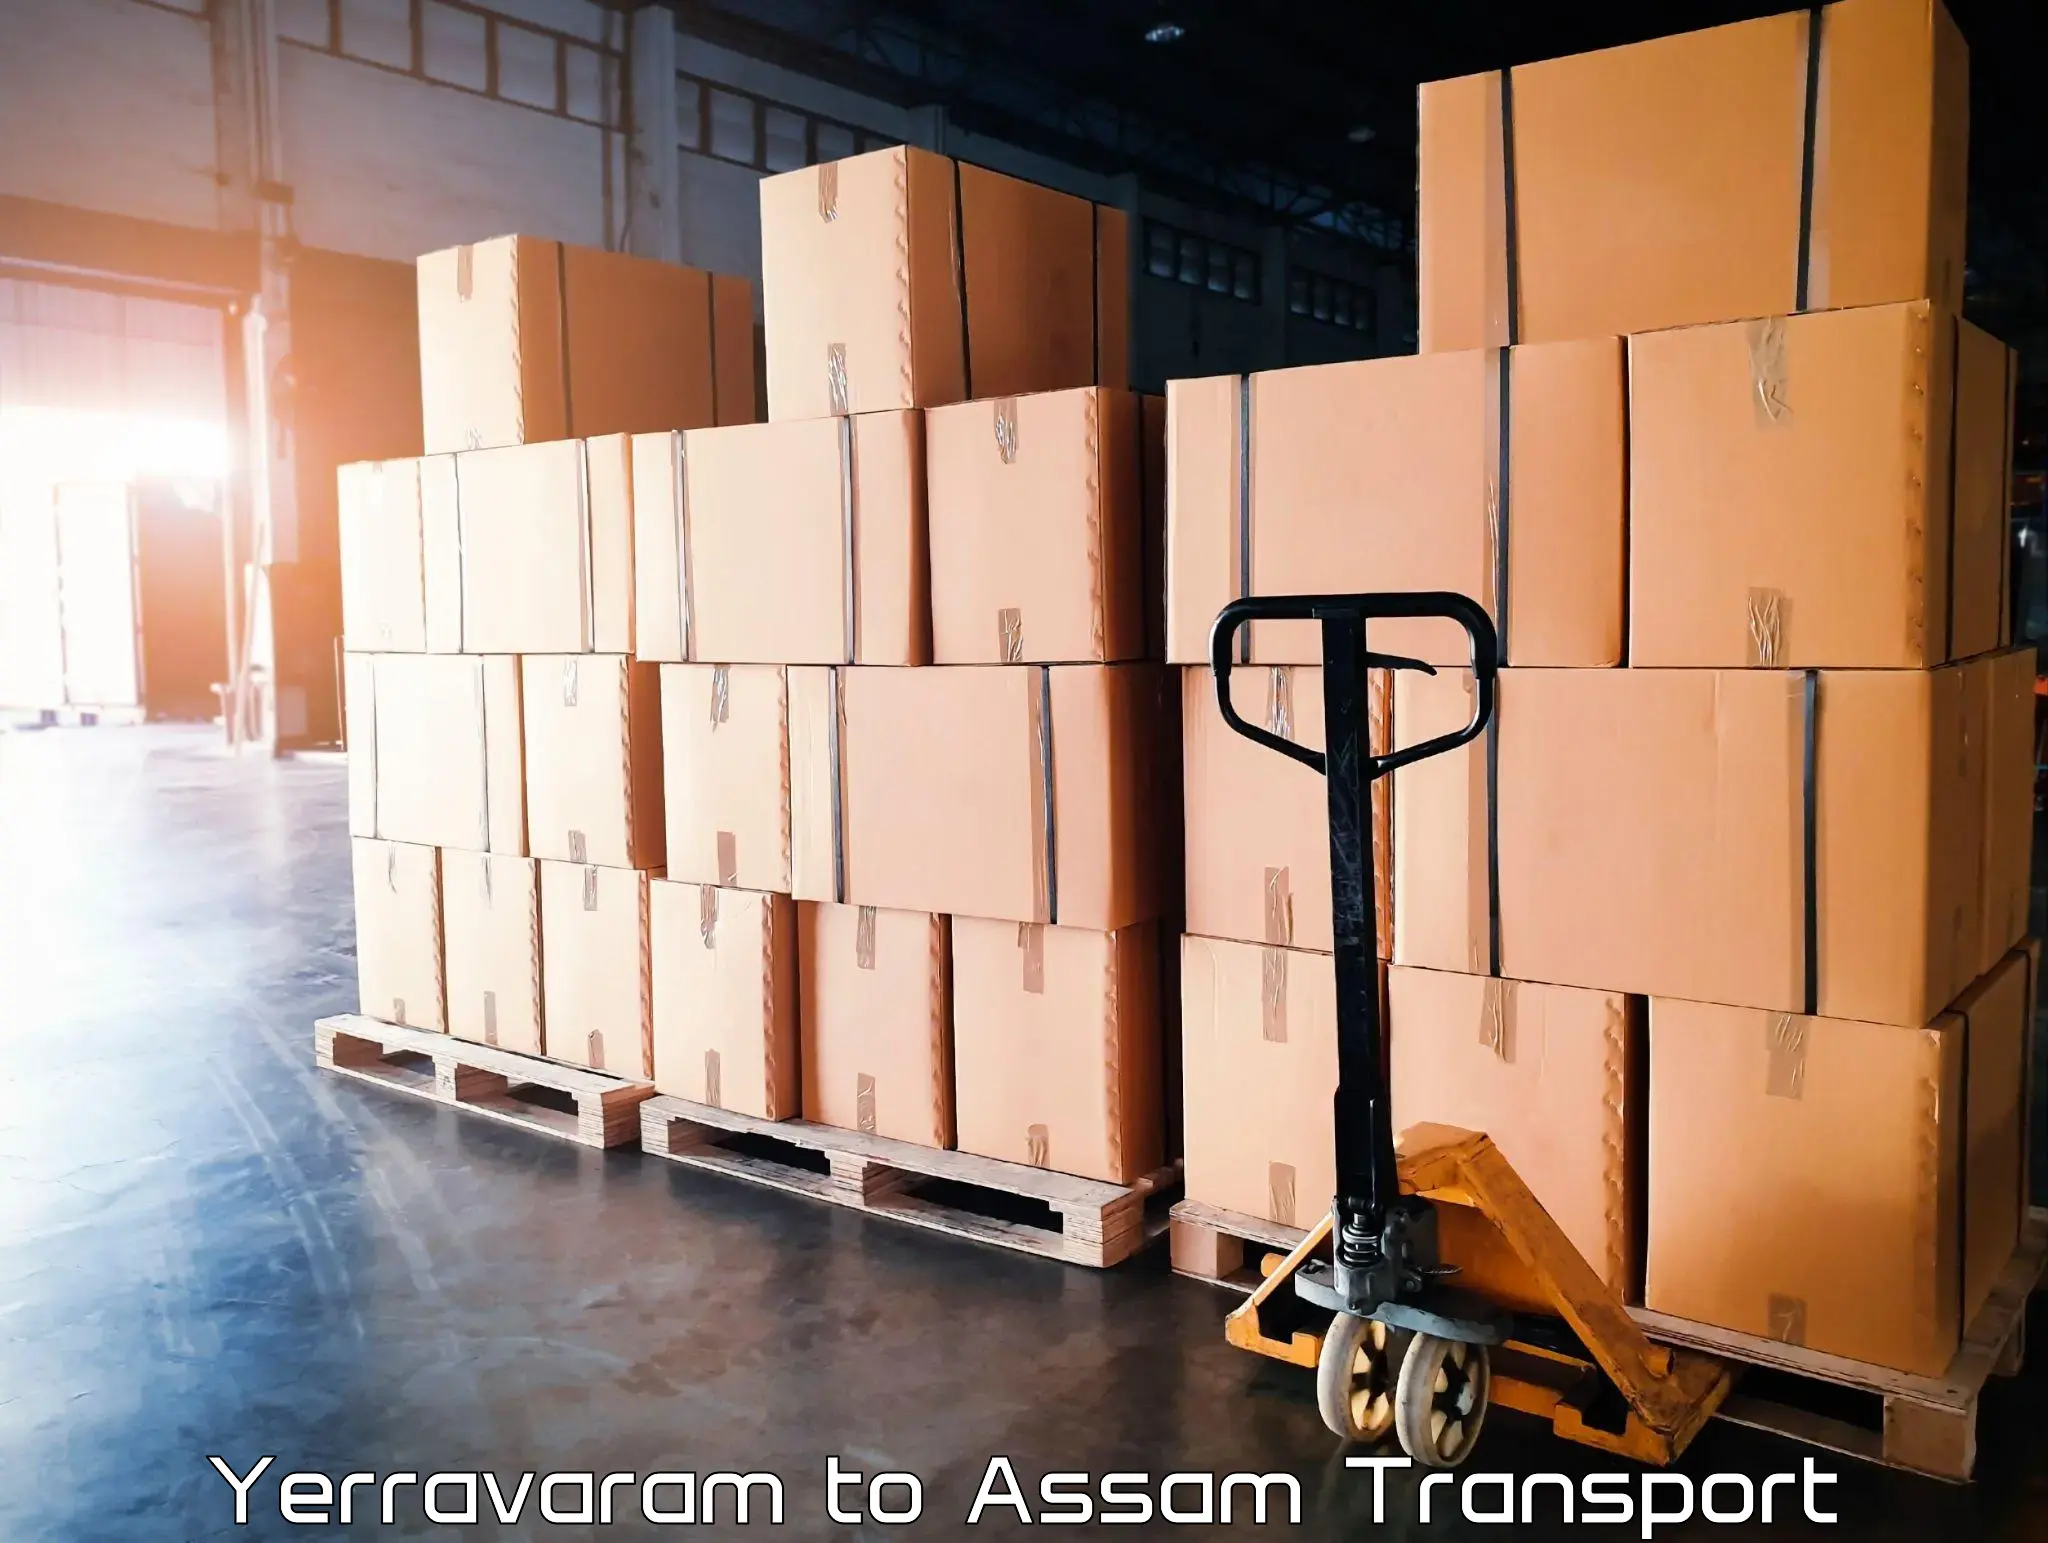 Transport in sharing Yerravaram to Sivasagar